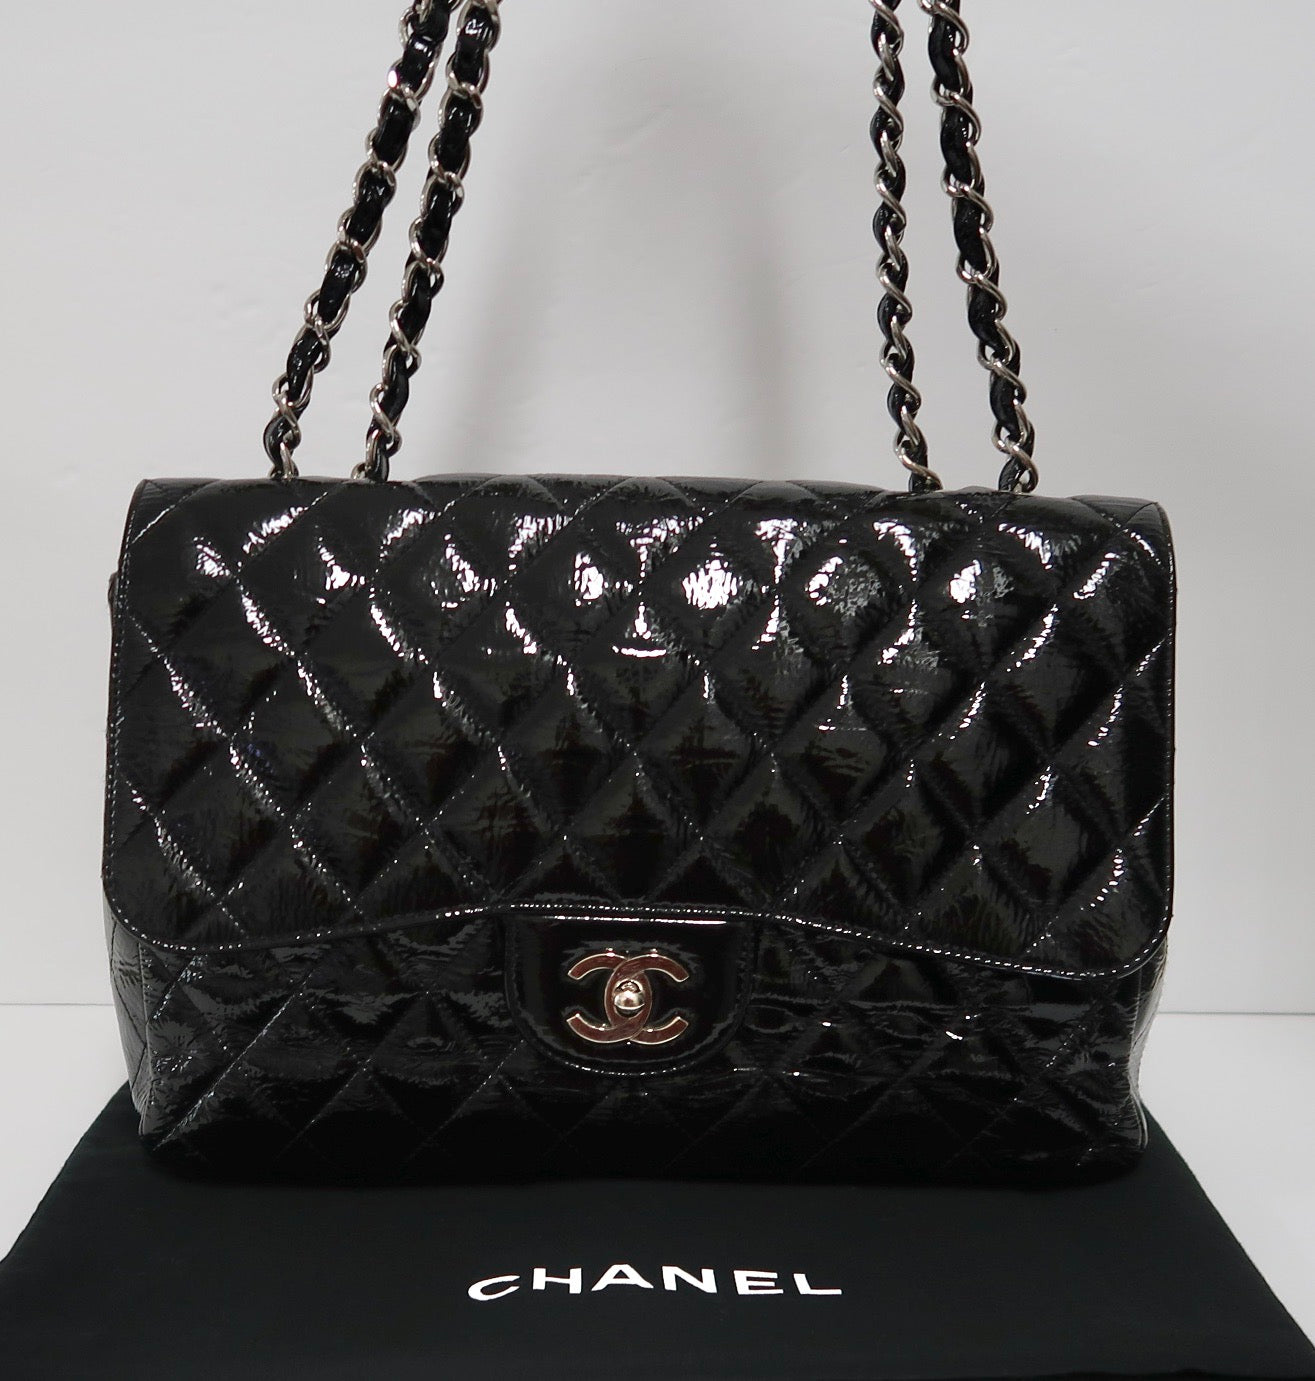 Authentic Chanel handbag | Chanel handbags, Chanel, Bags